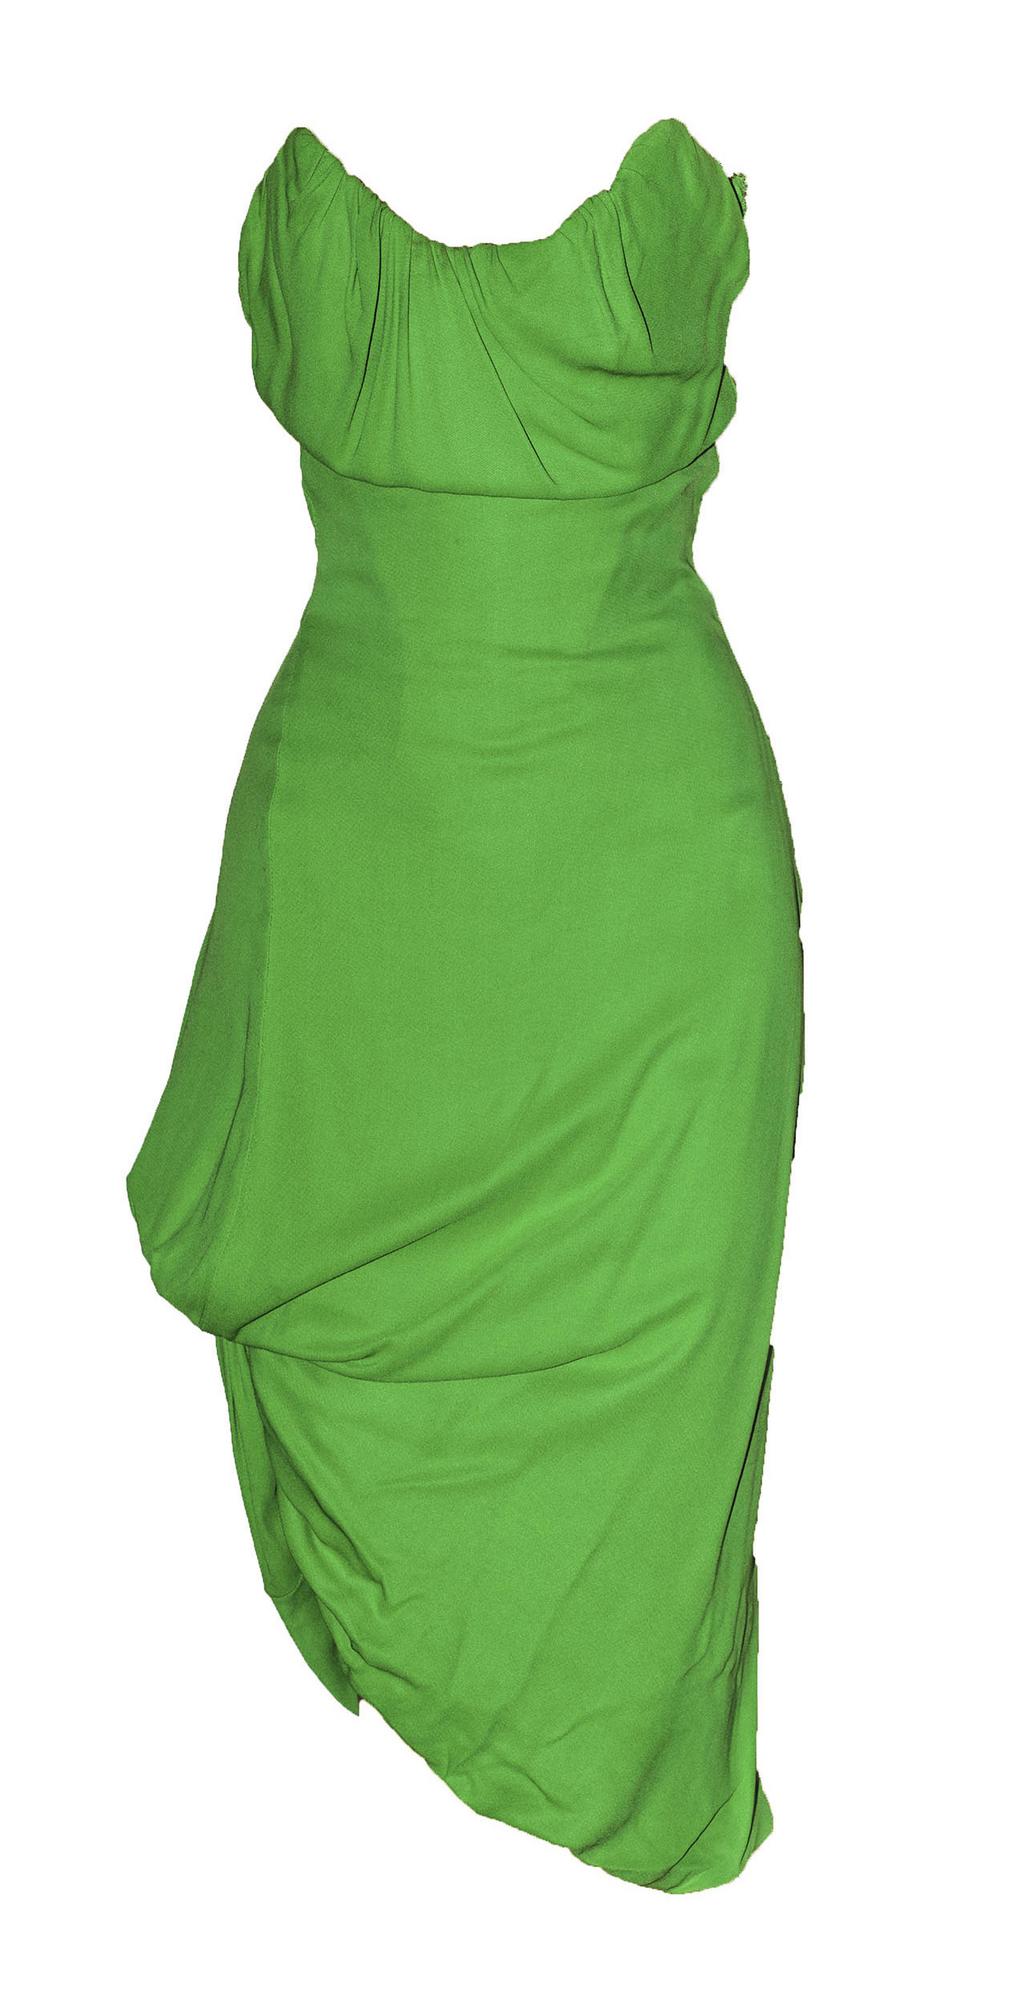 Vivienne Westwood SLIT CORSET DRESS Description: Strapless dress, in green...